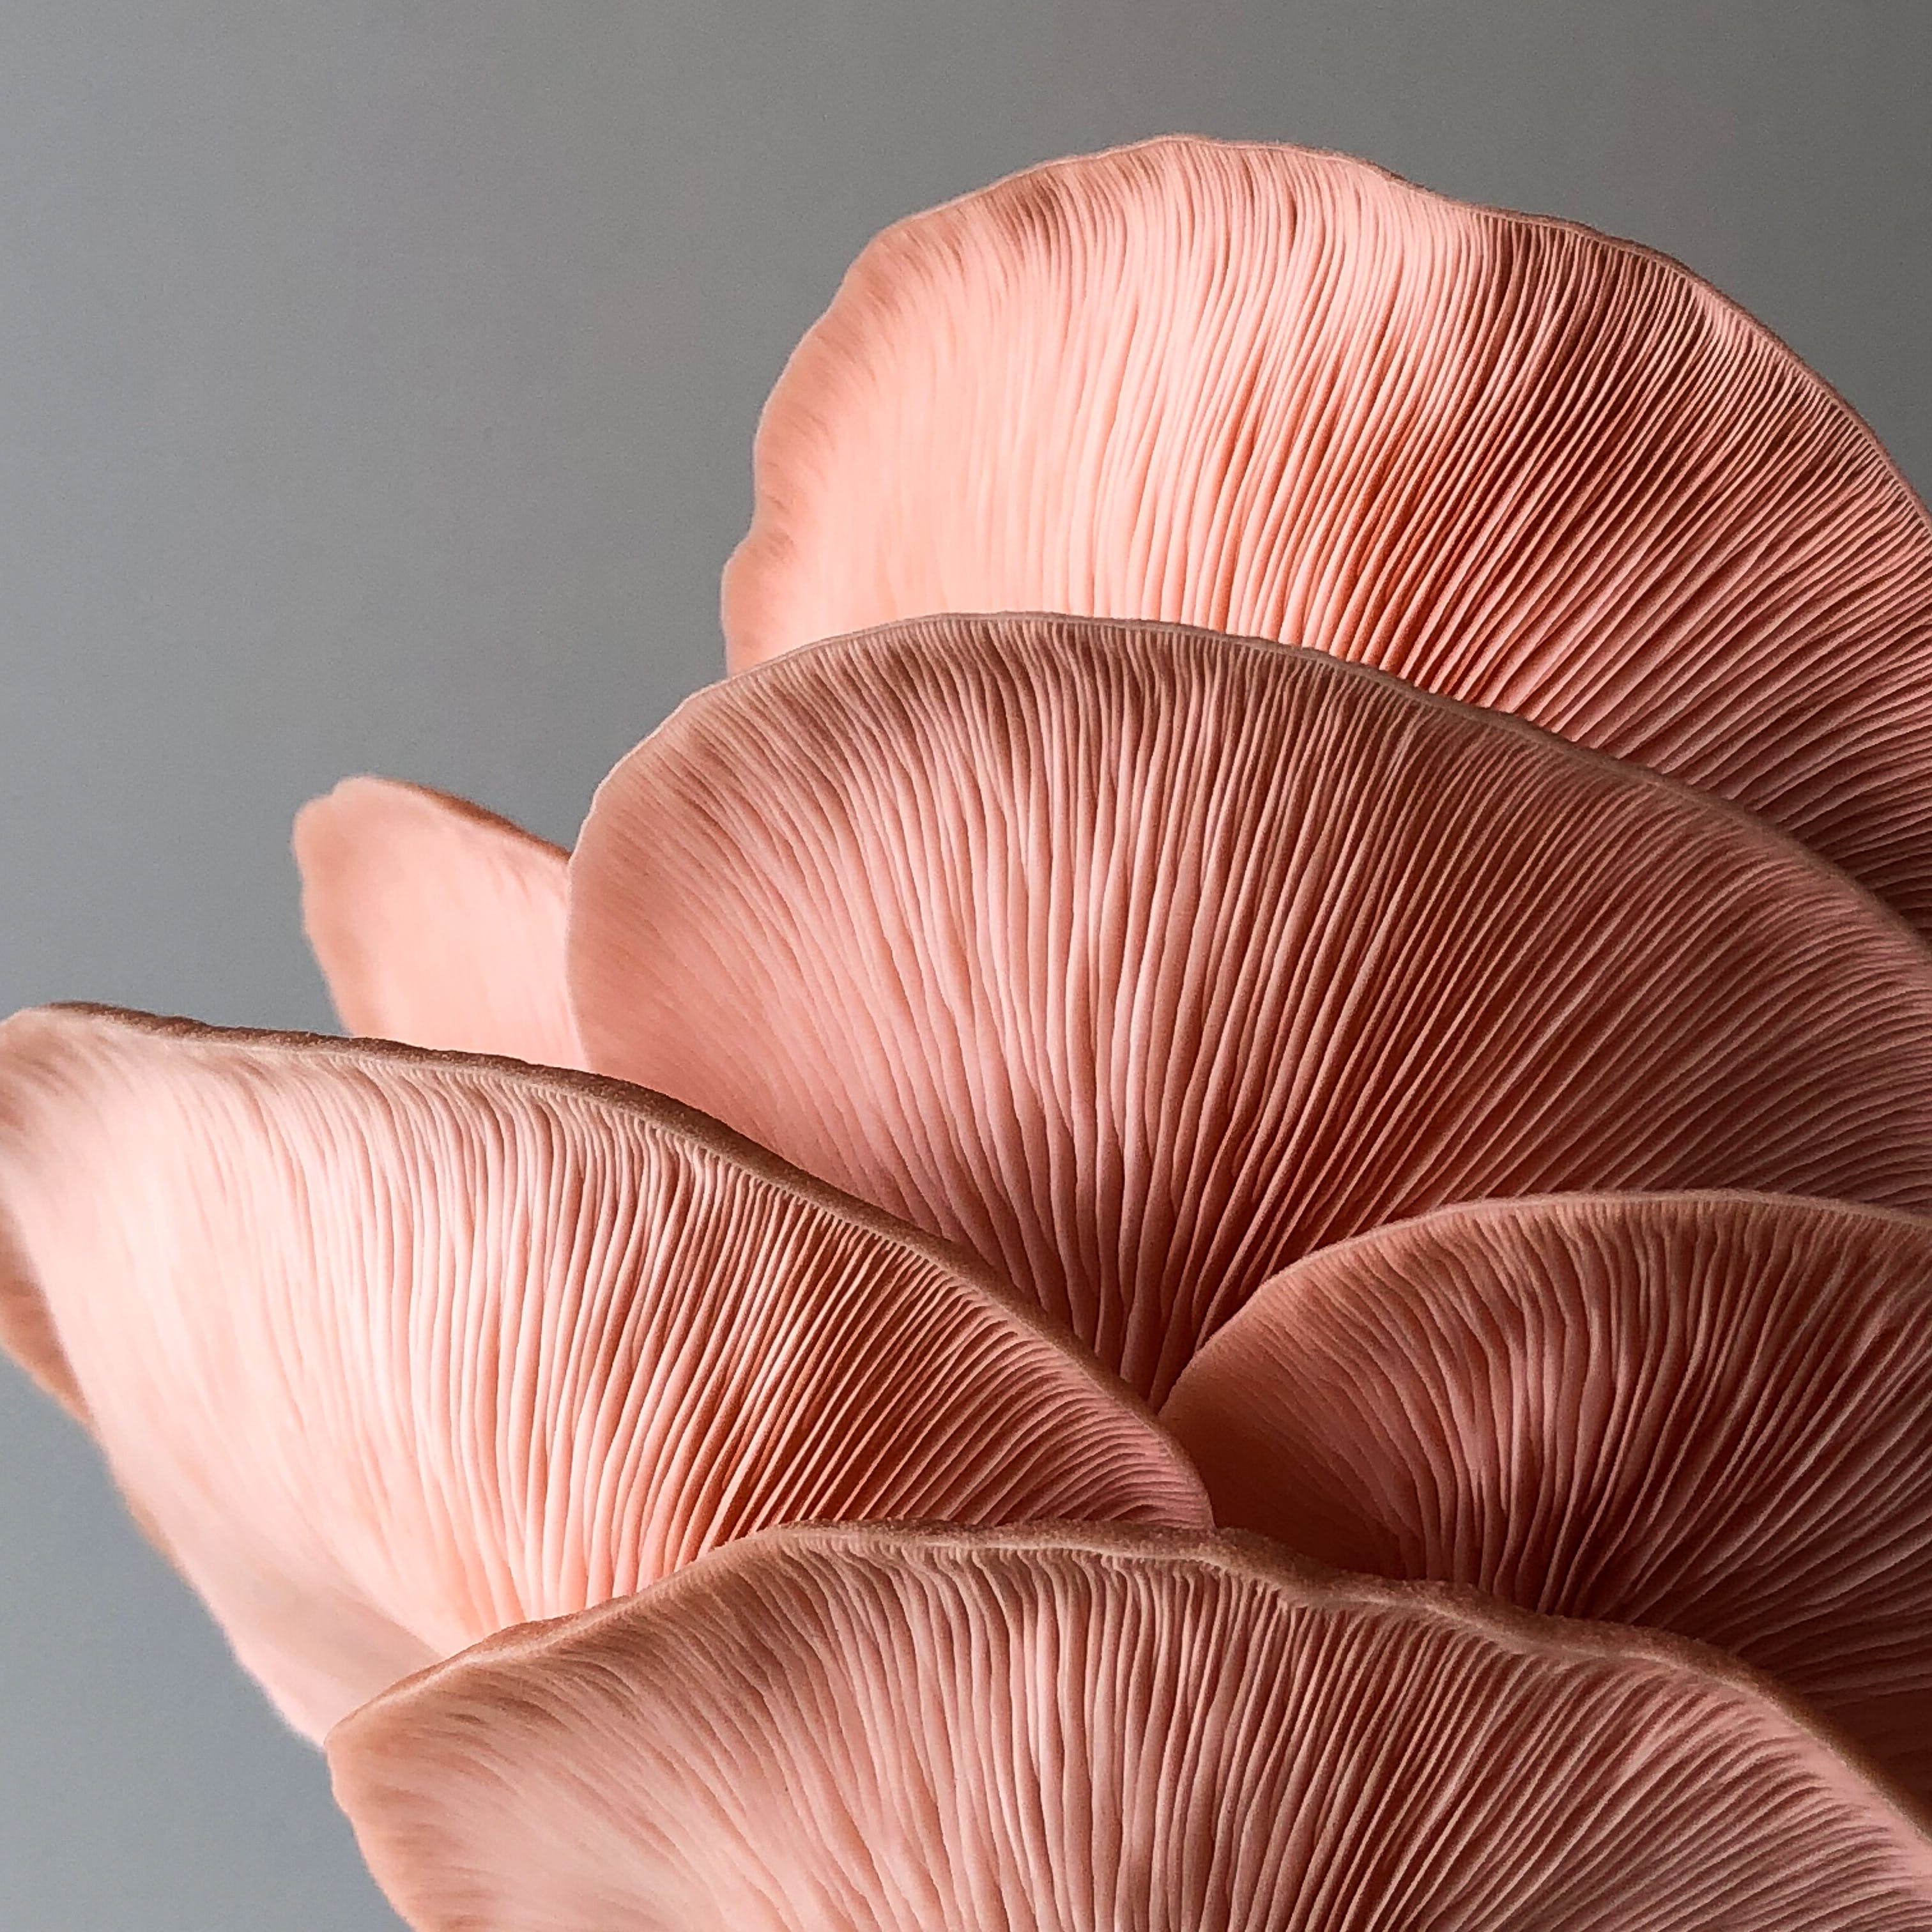 Mushroom Growing Masterclass - Restaurant Gold Coast